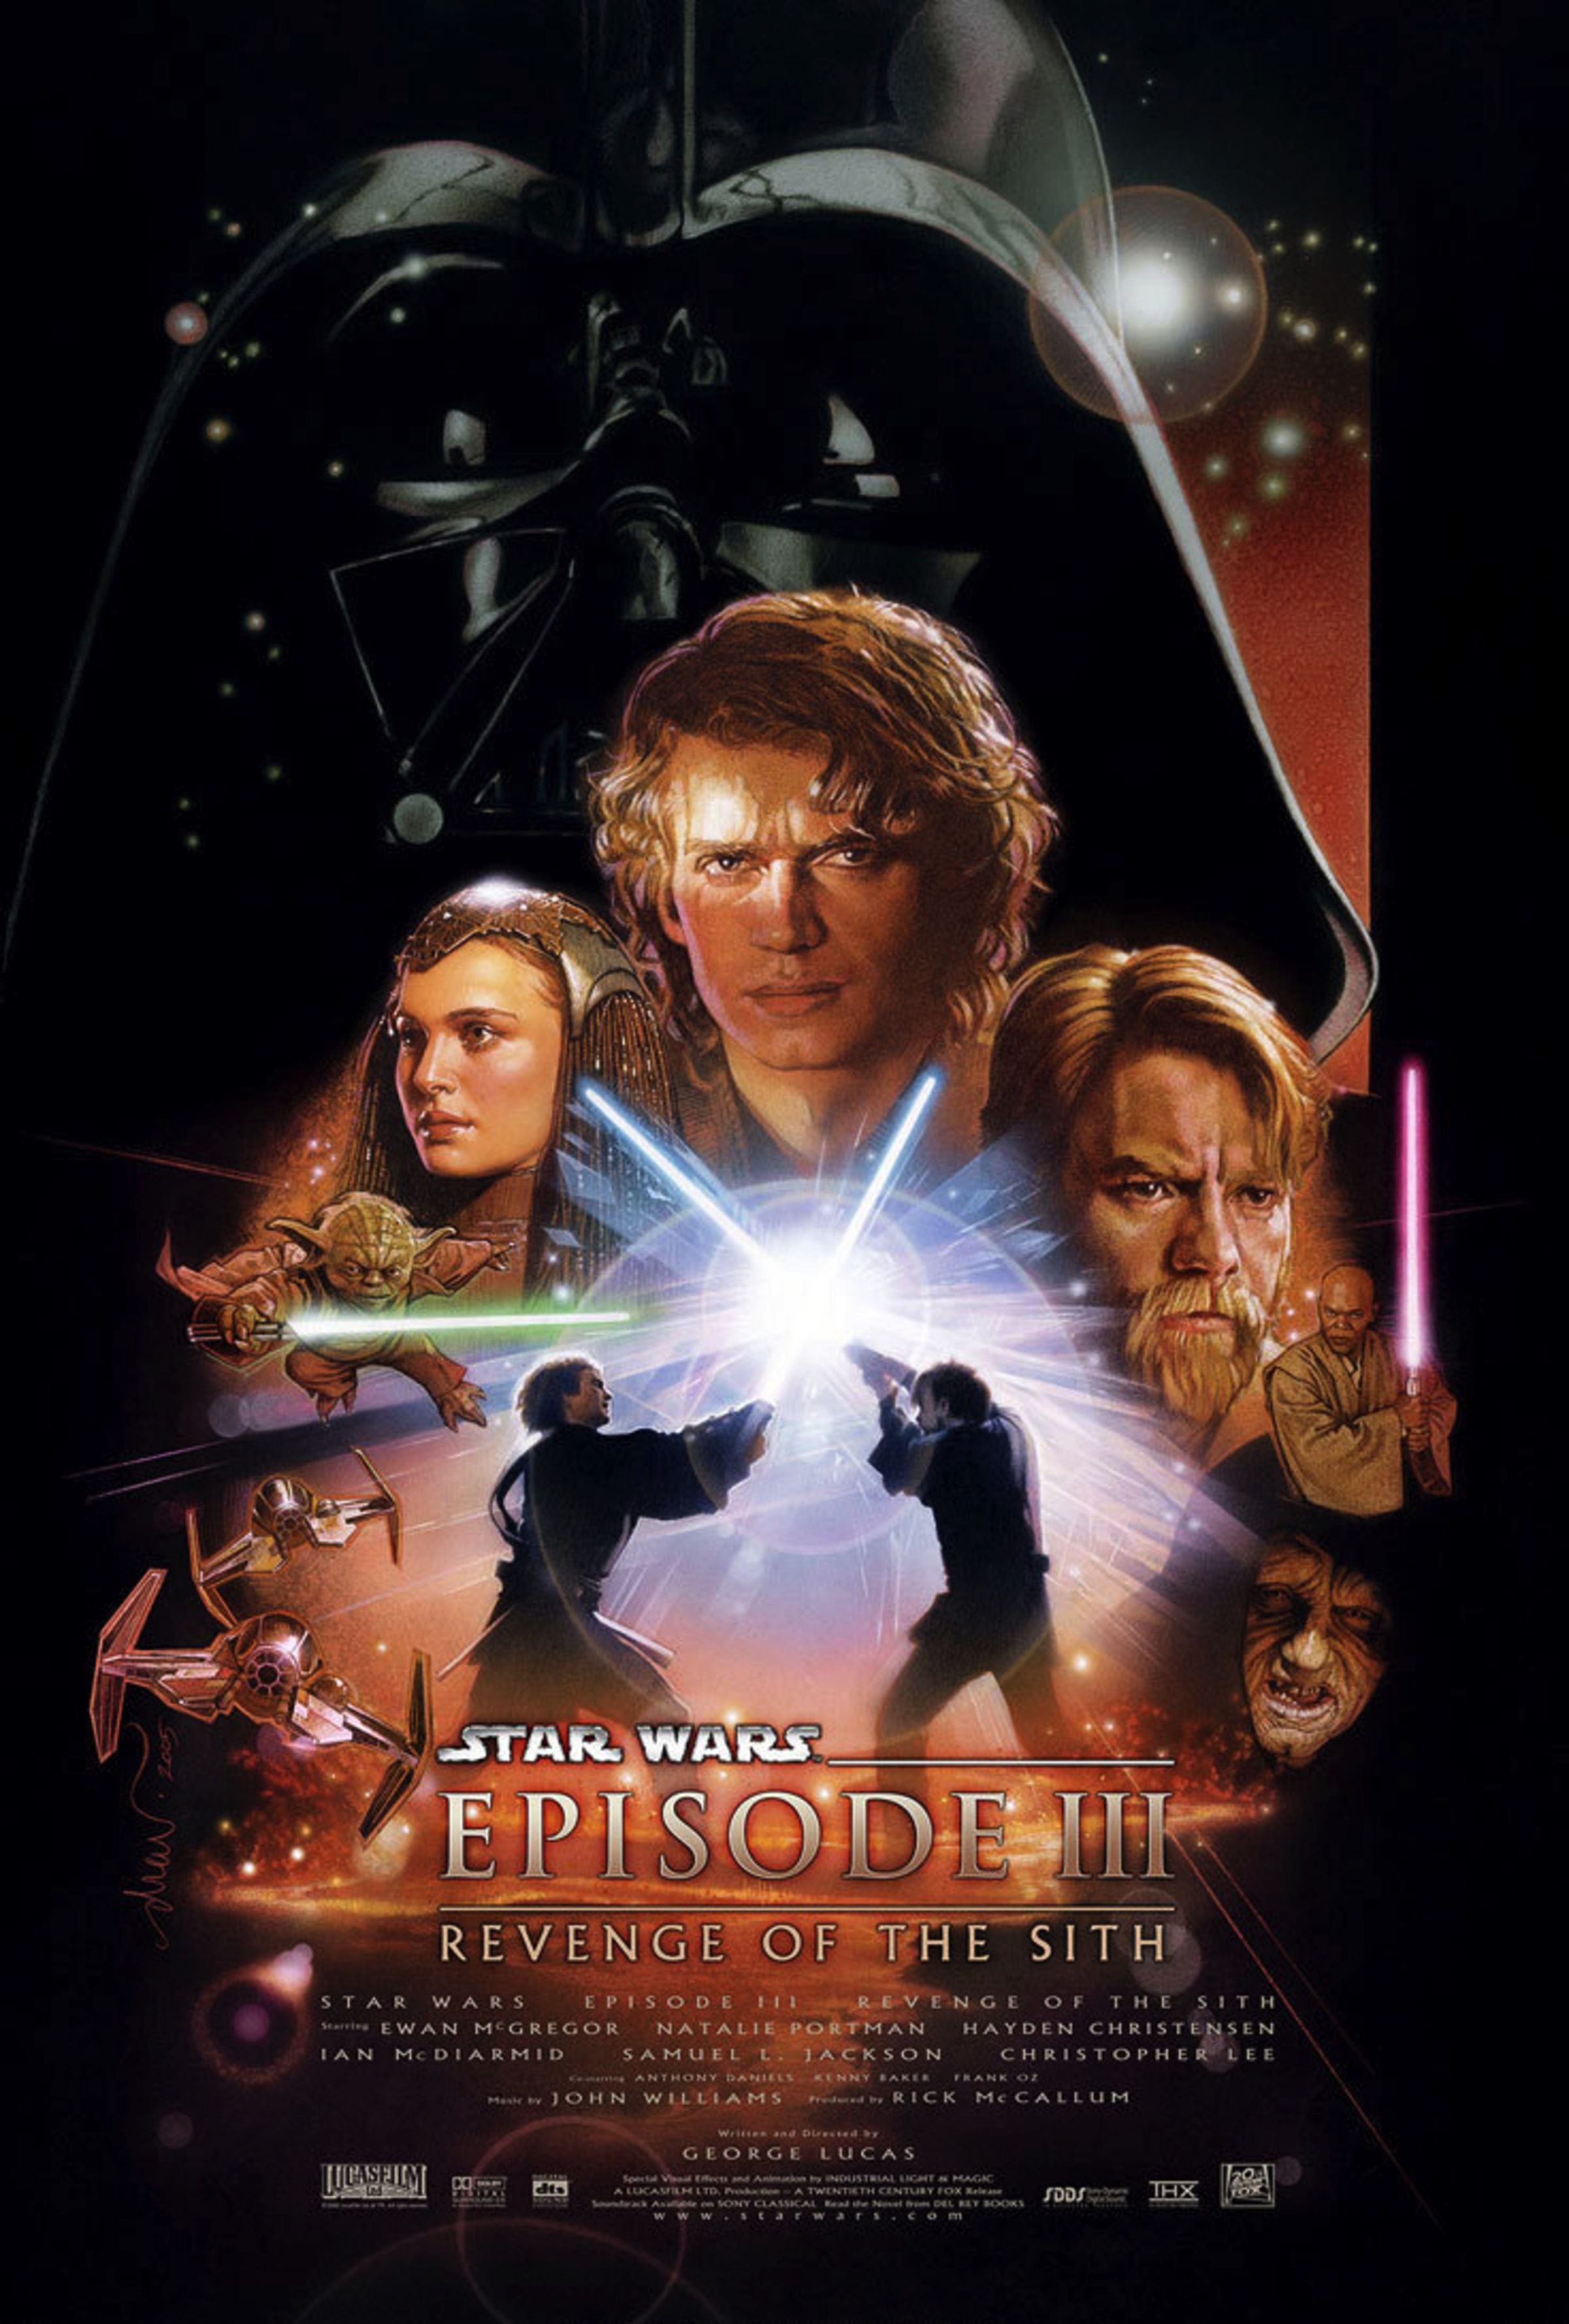 Star Wars saga posters